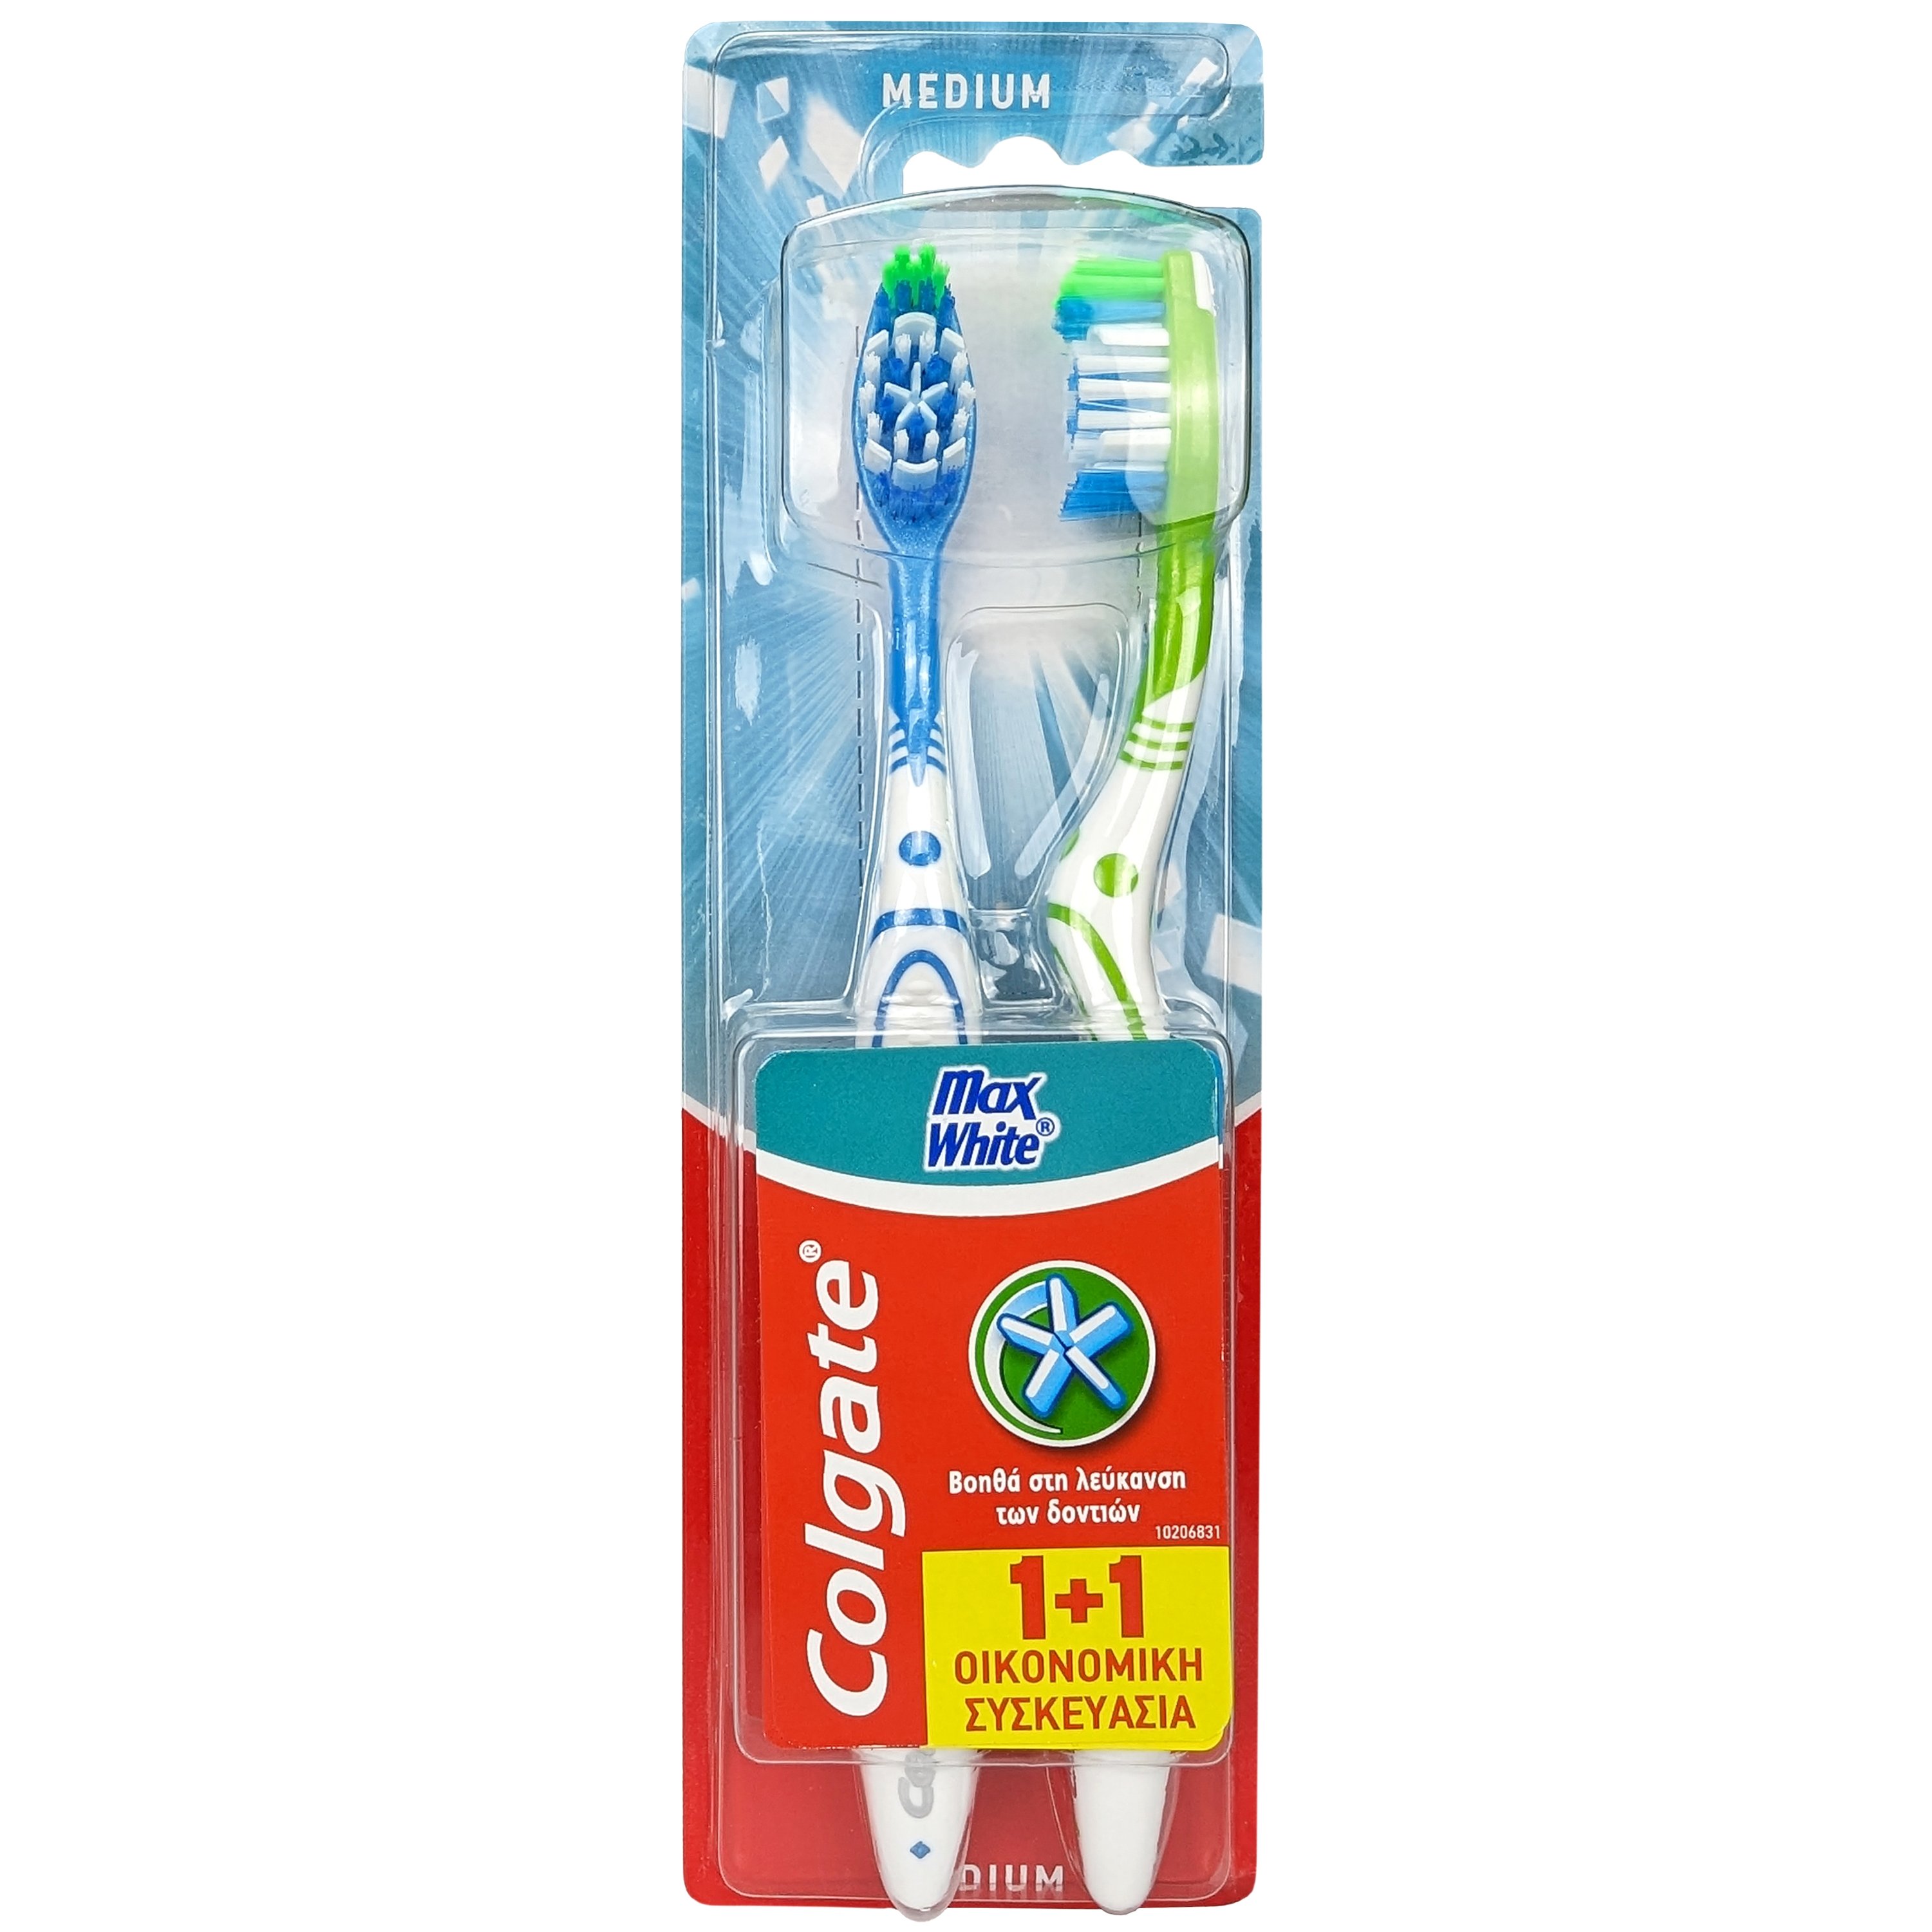 Colgate Max White Medium Toothbrush Μέτρια Οδοντόβουρτσα για Ολοκληρωμένο Καθαρισμό & Απομάκρυνση των Χρωματικών Λεκέδων 2 Τεμάχια – Μπλε / Πράσινο